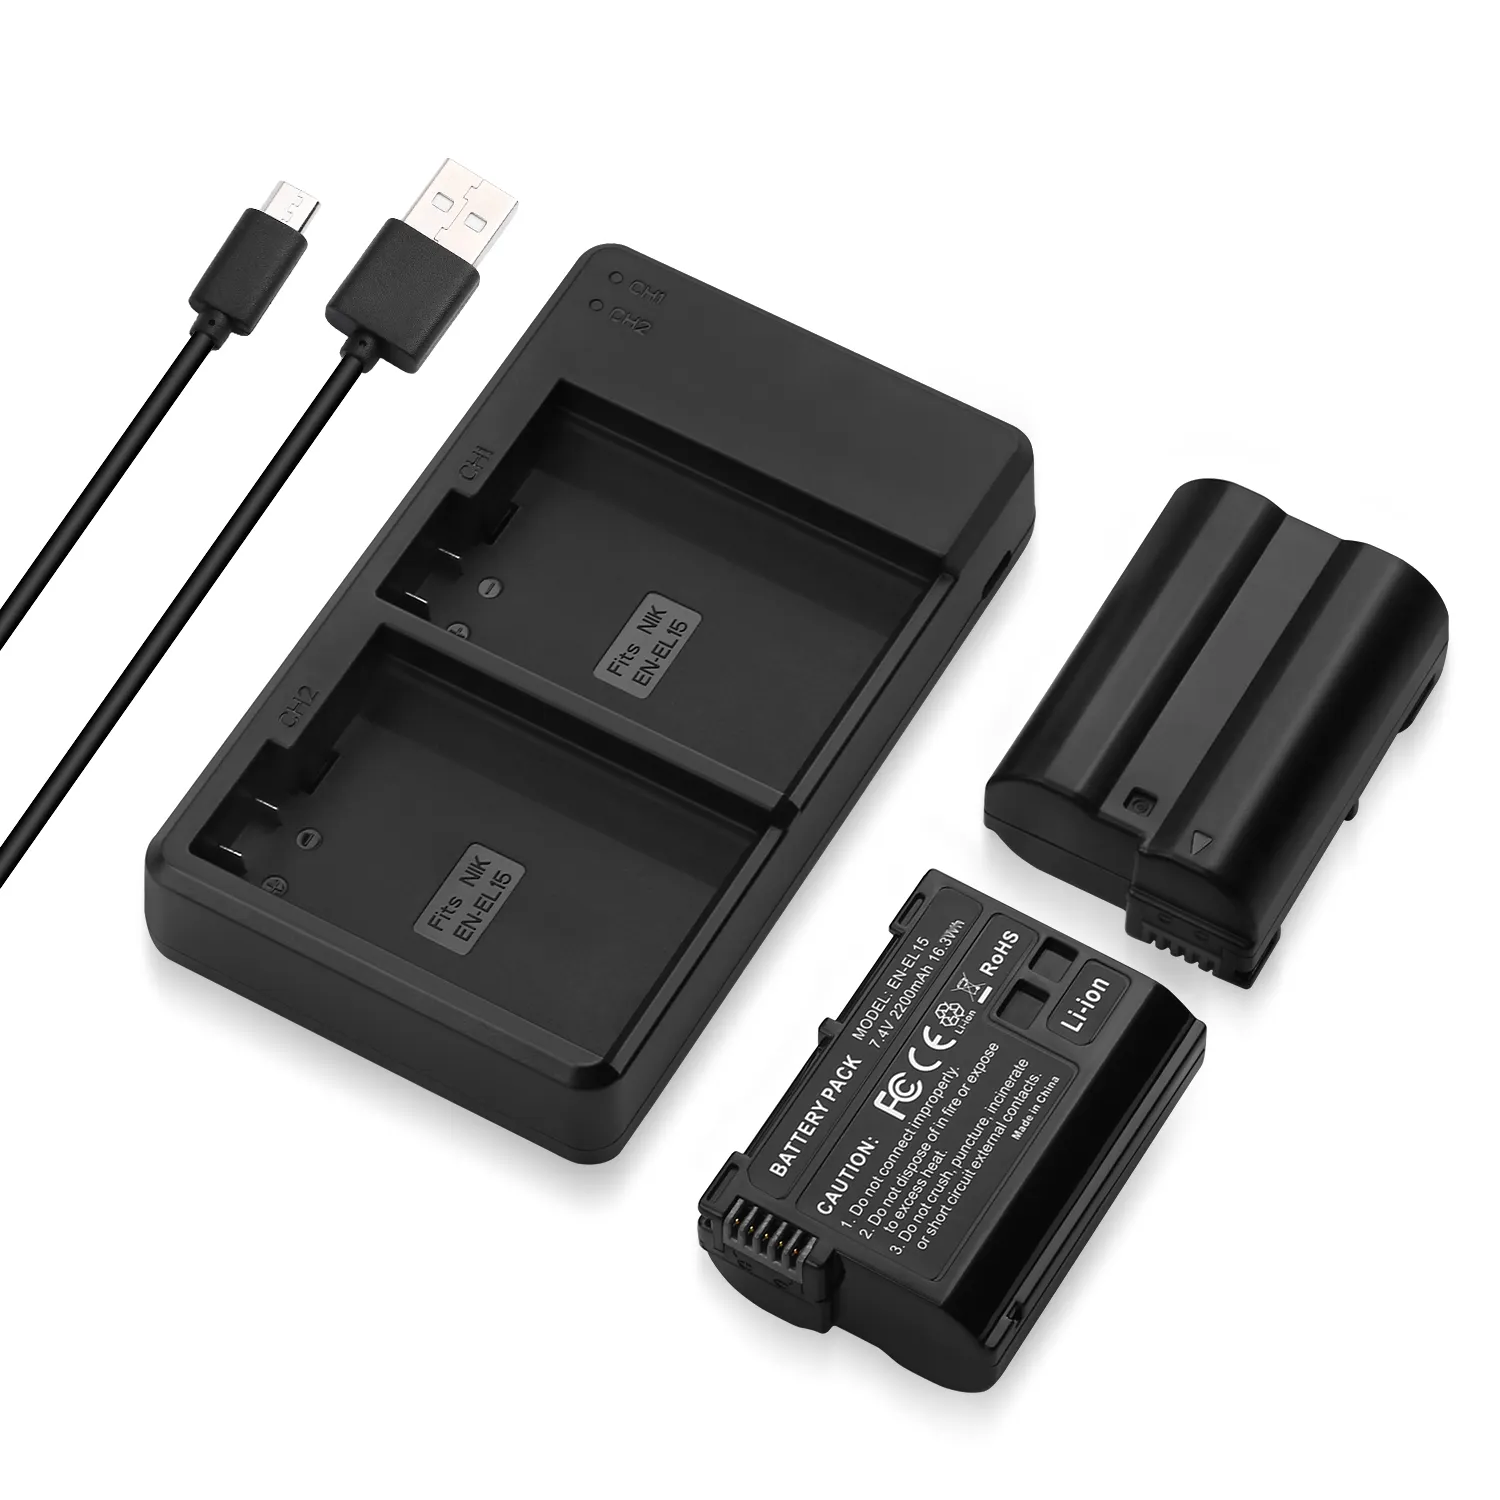 Pengisi daya baterai Digital, pengisi daya baterai Digital ion litium Mini USB perjalanan Tipe c Multi slot dapat diisi ulang Universal